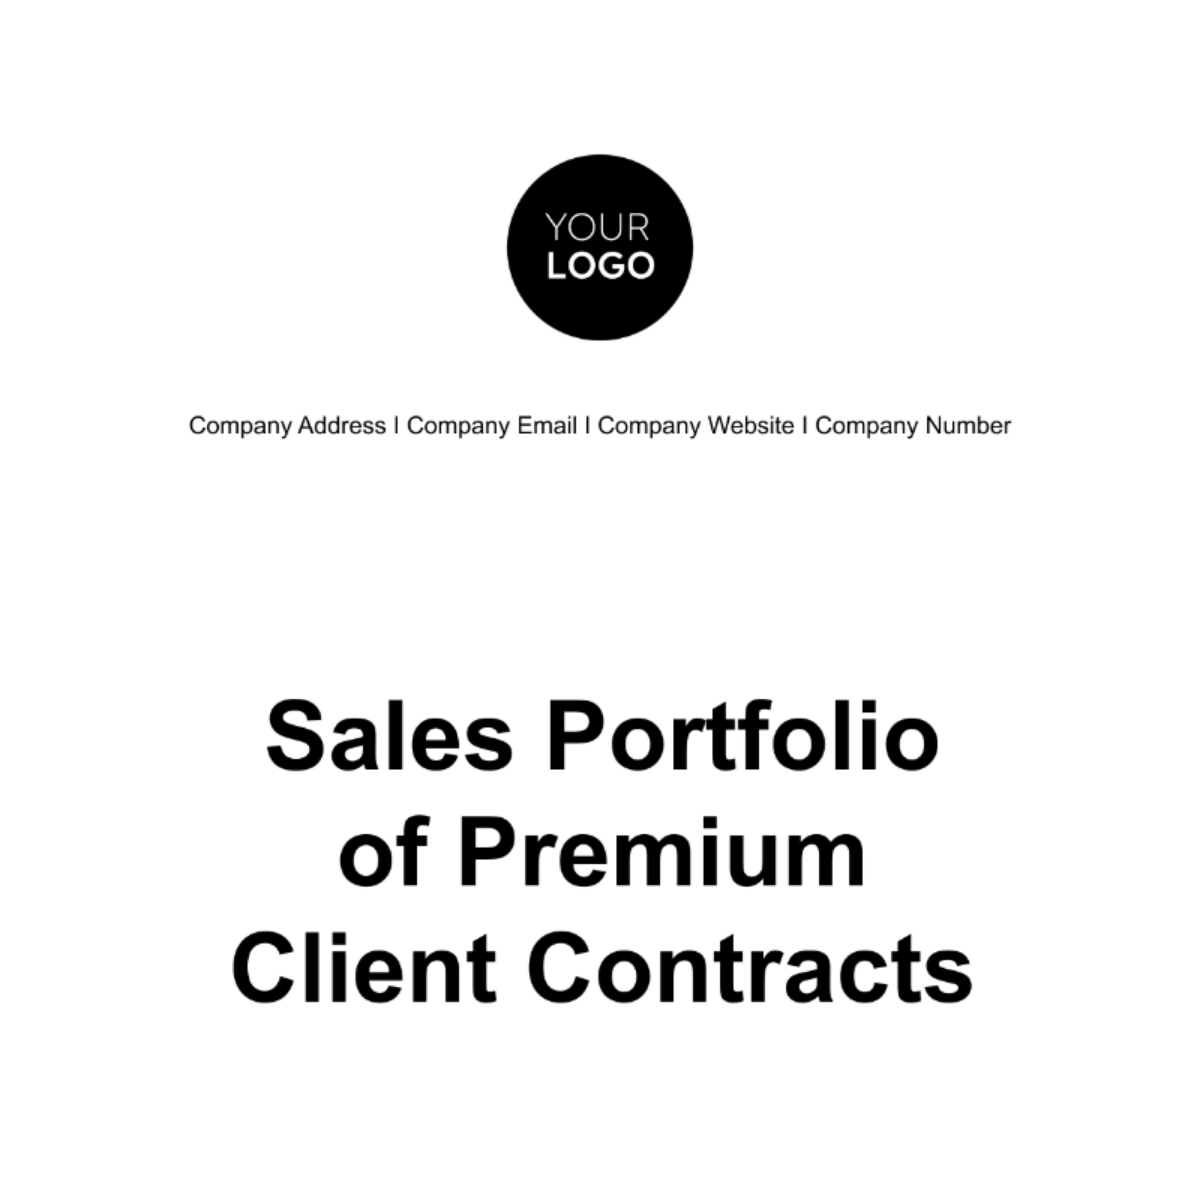 Free Sales Portfolio of Premium Client Contracts Template